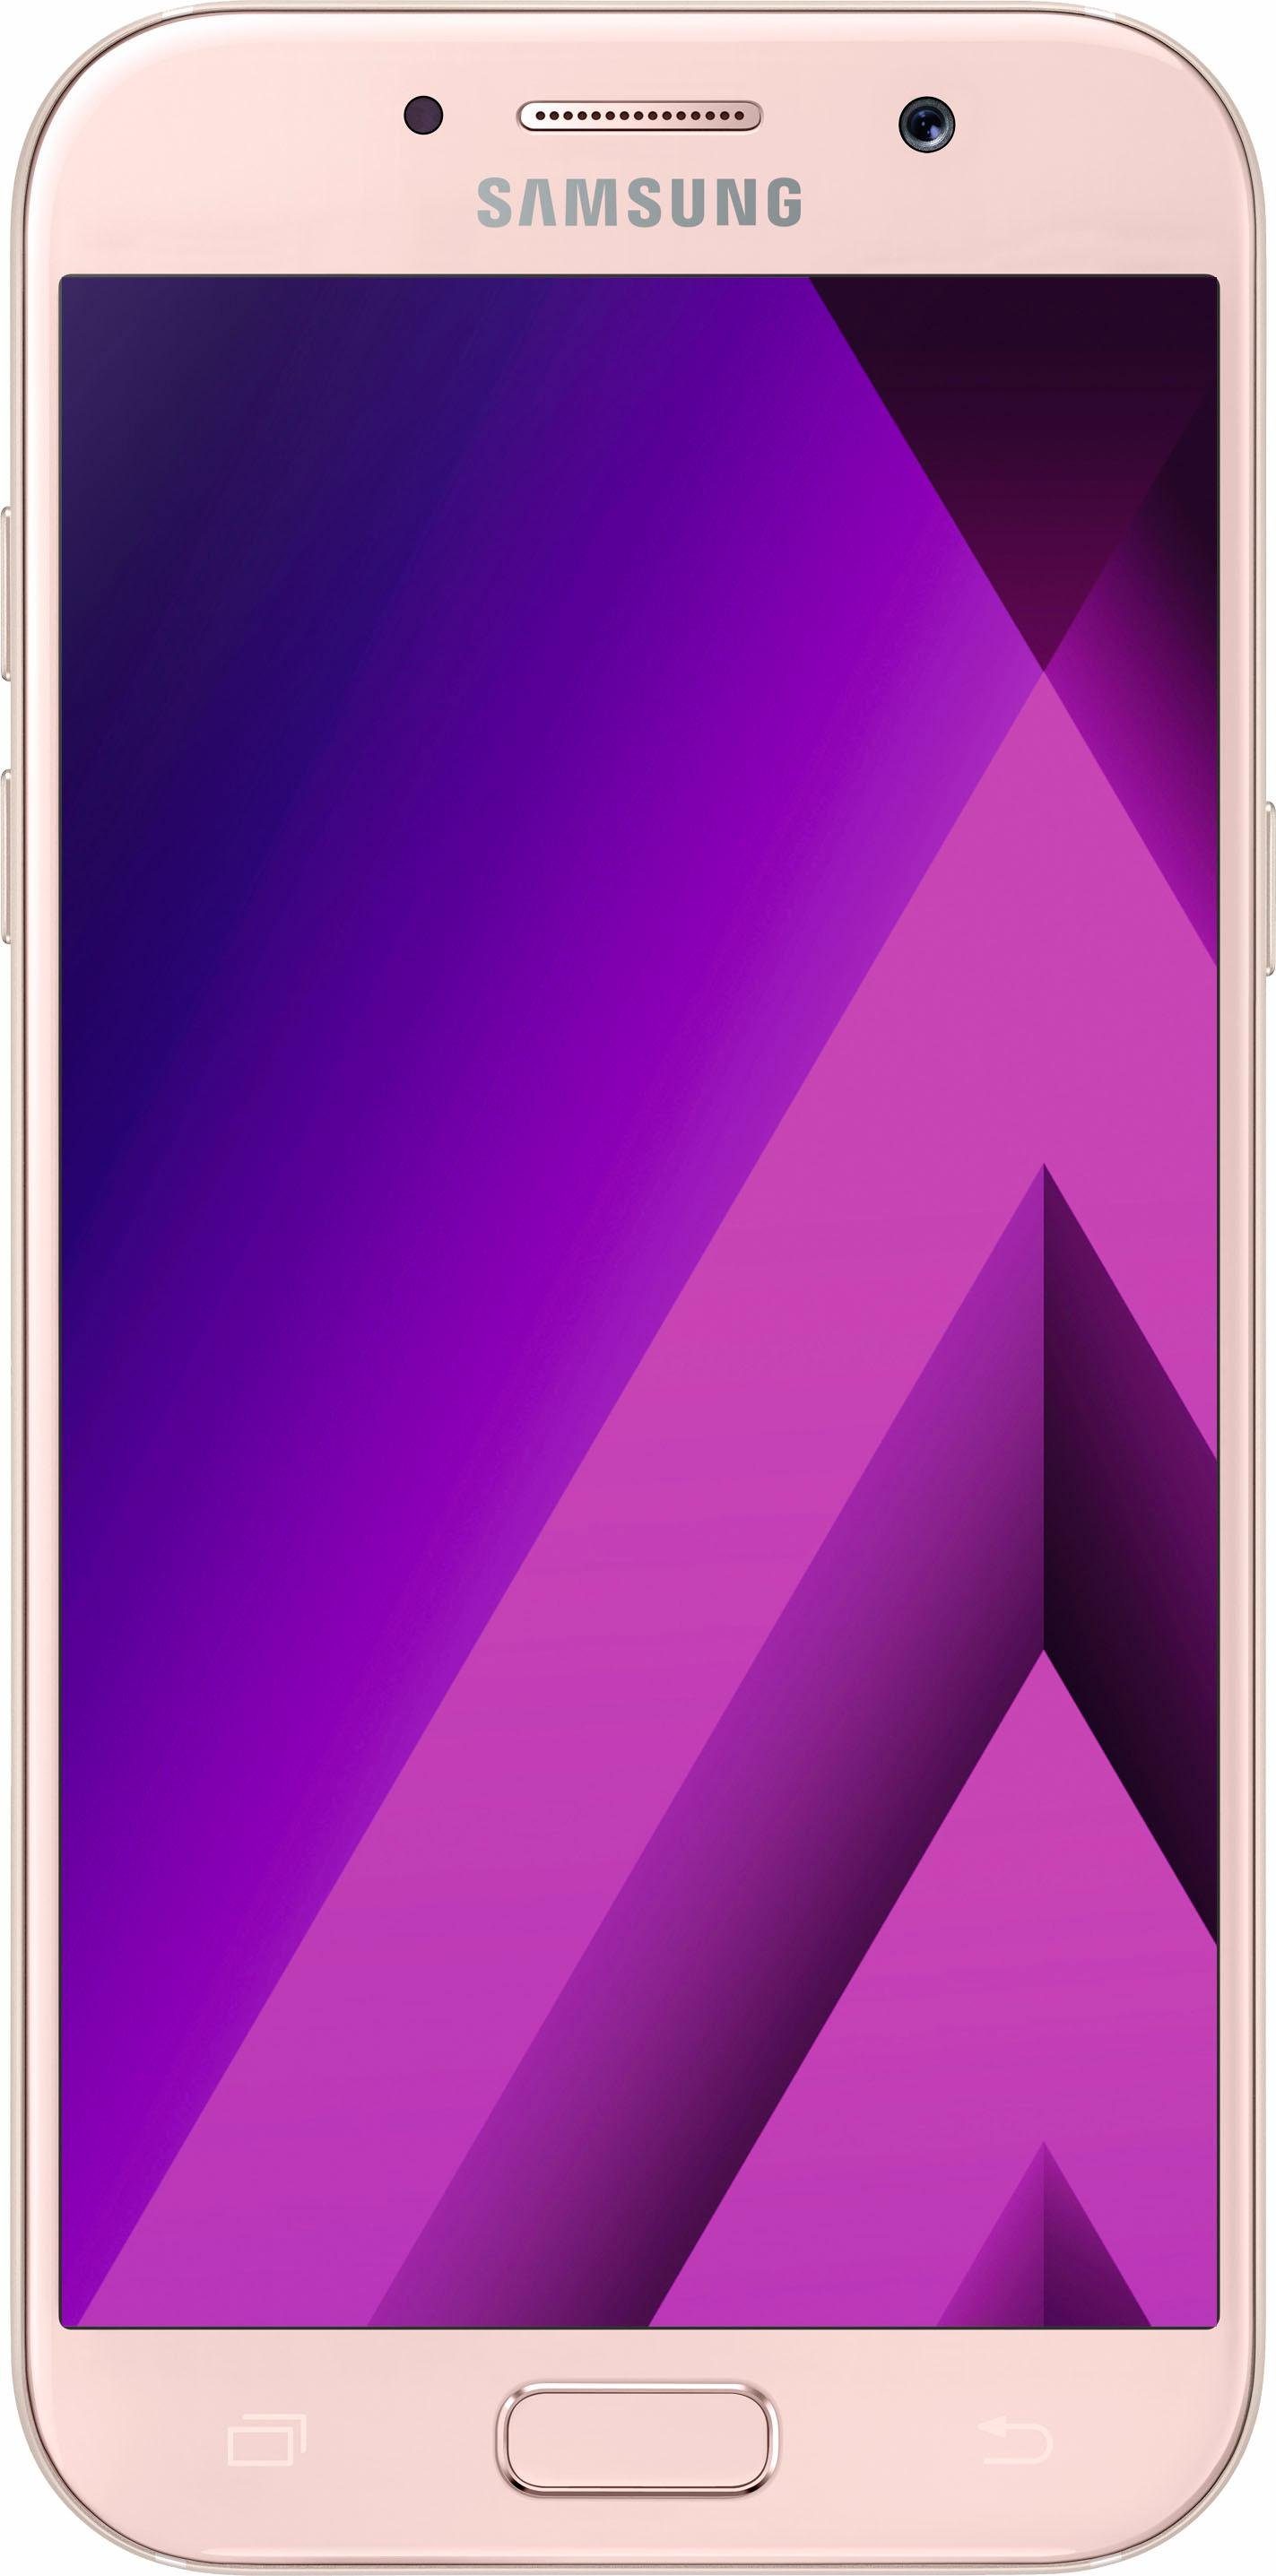 SAMSUNG SAMSUNG Galaxy A5 (2017) smartphone, 13,22 cm (5,2 inch) display, LTE (4G)